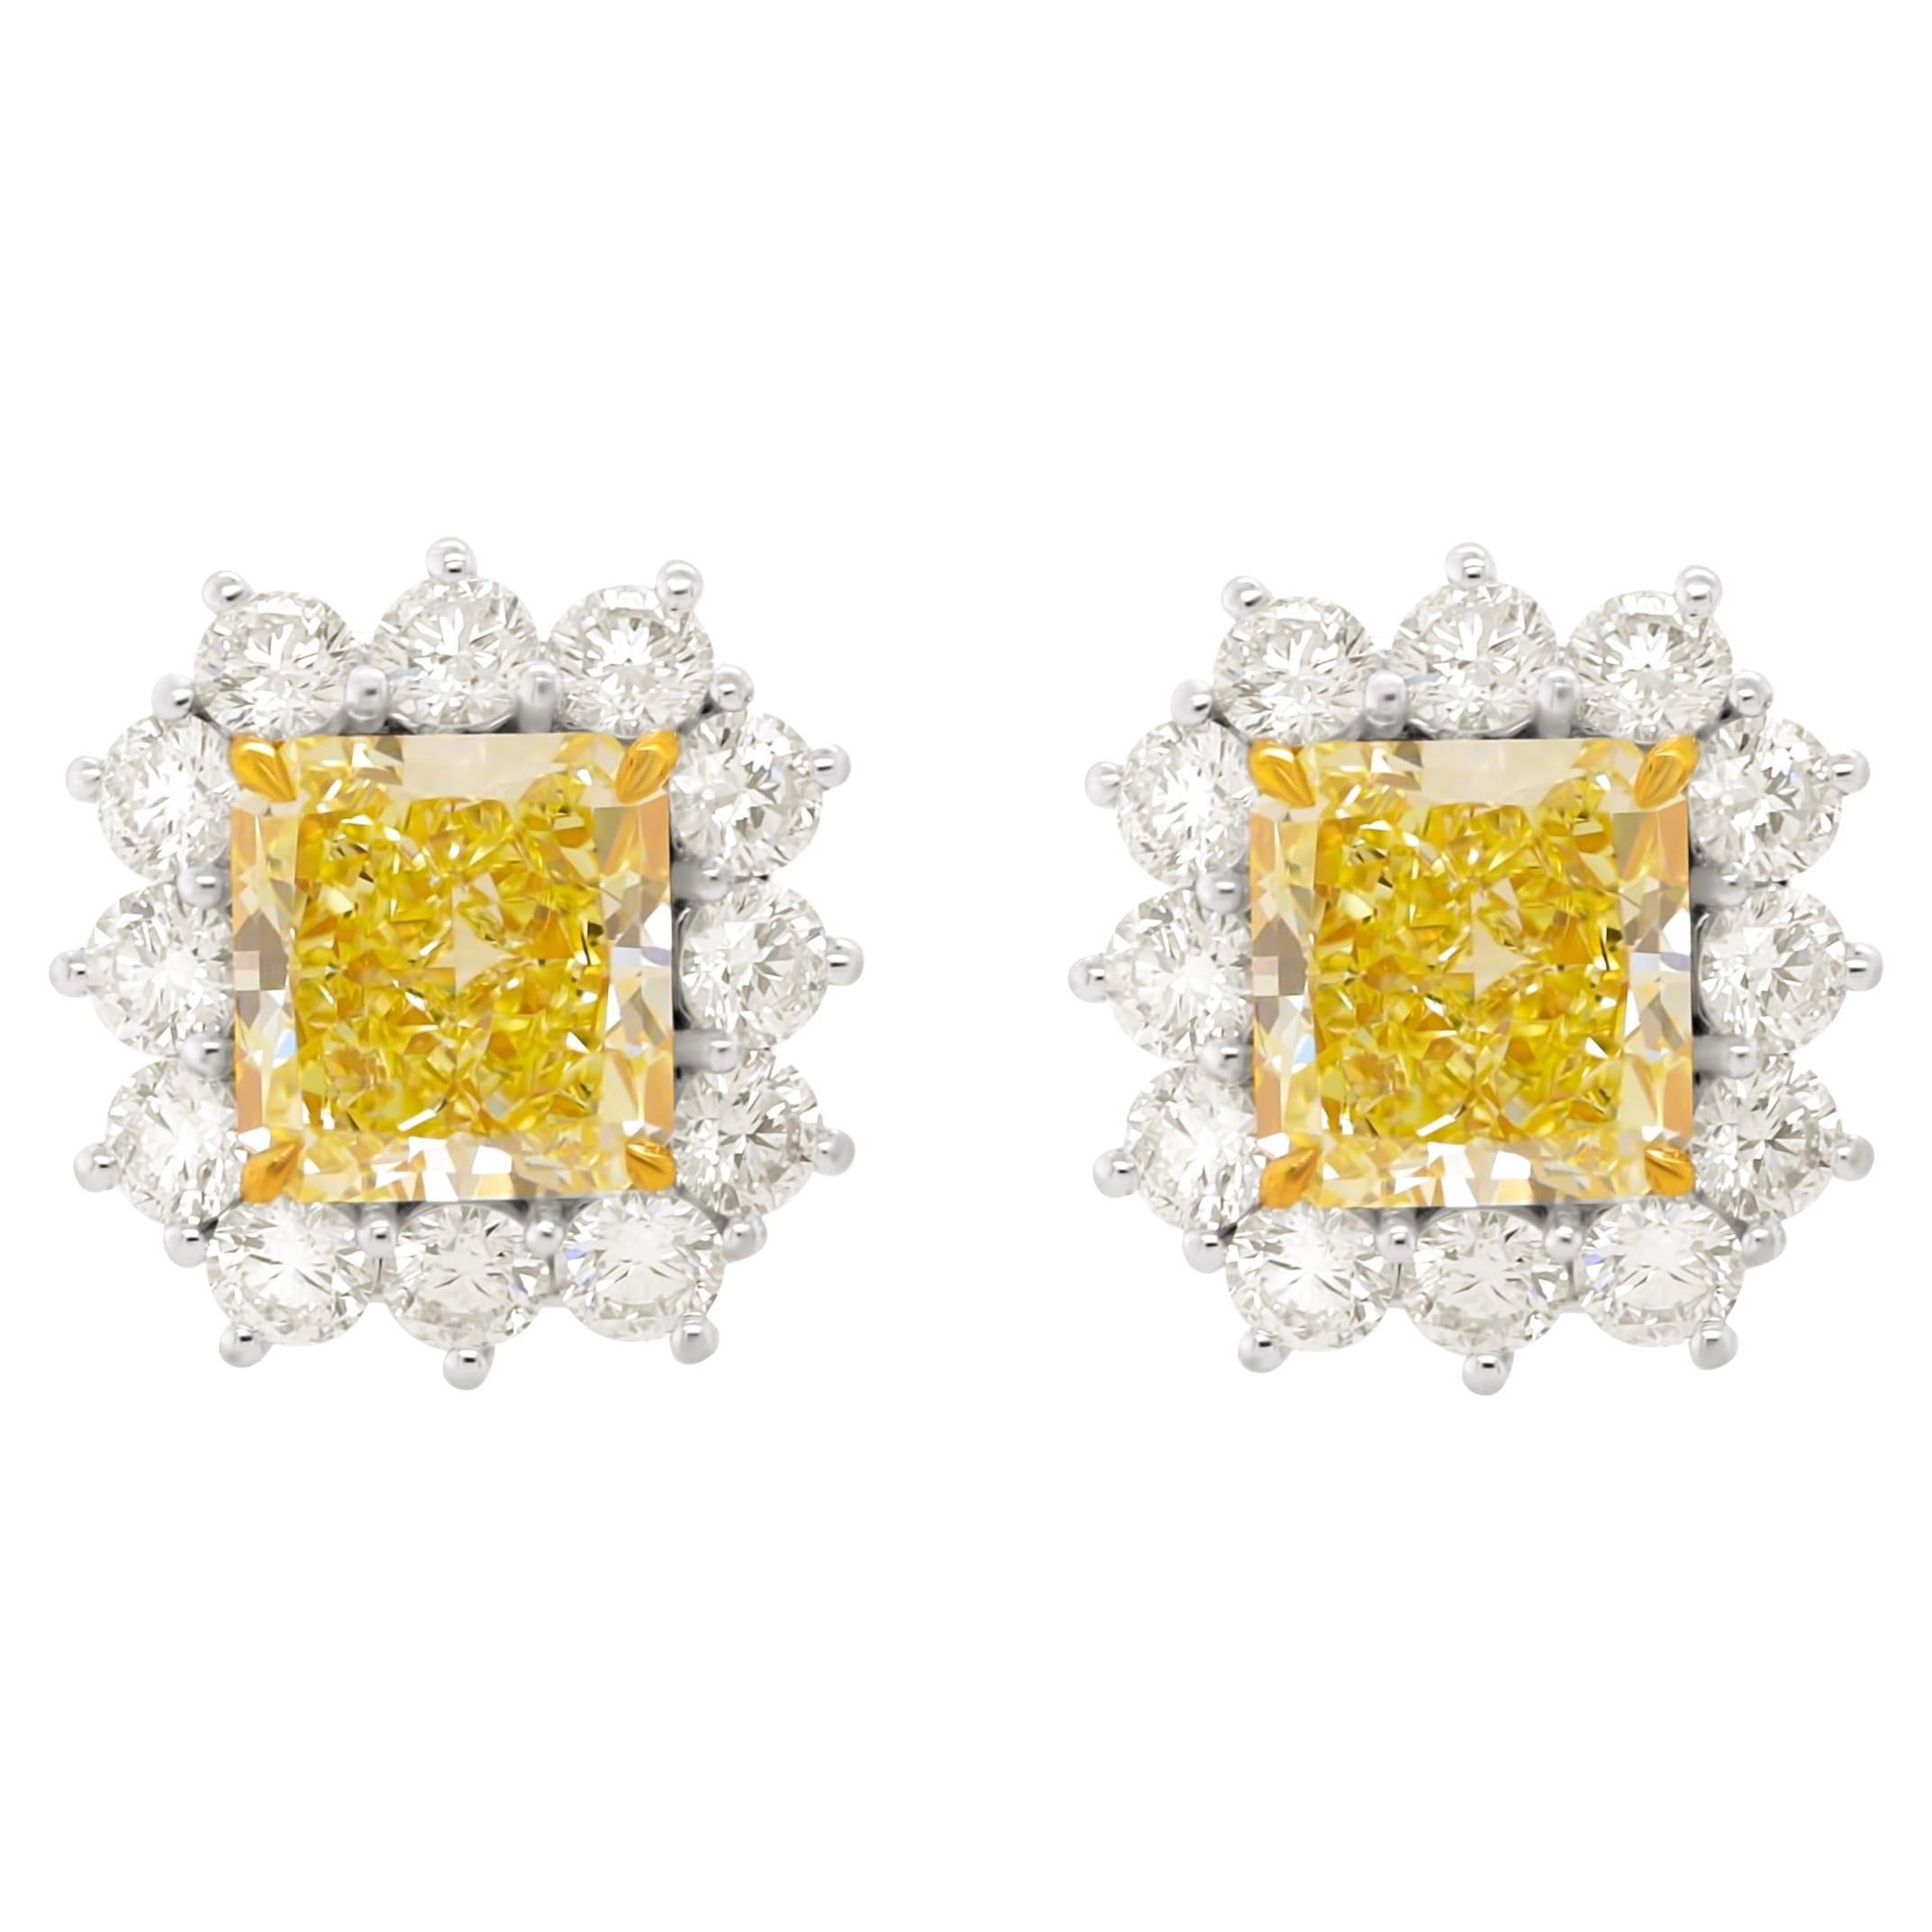 Diana M. 9.79 Carat Yellow Diamond Stud Earrings